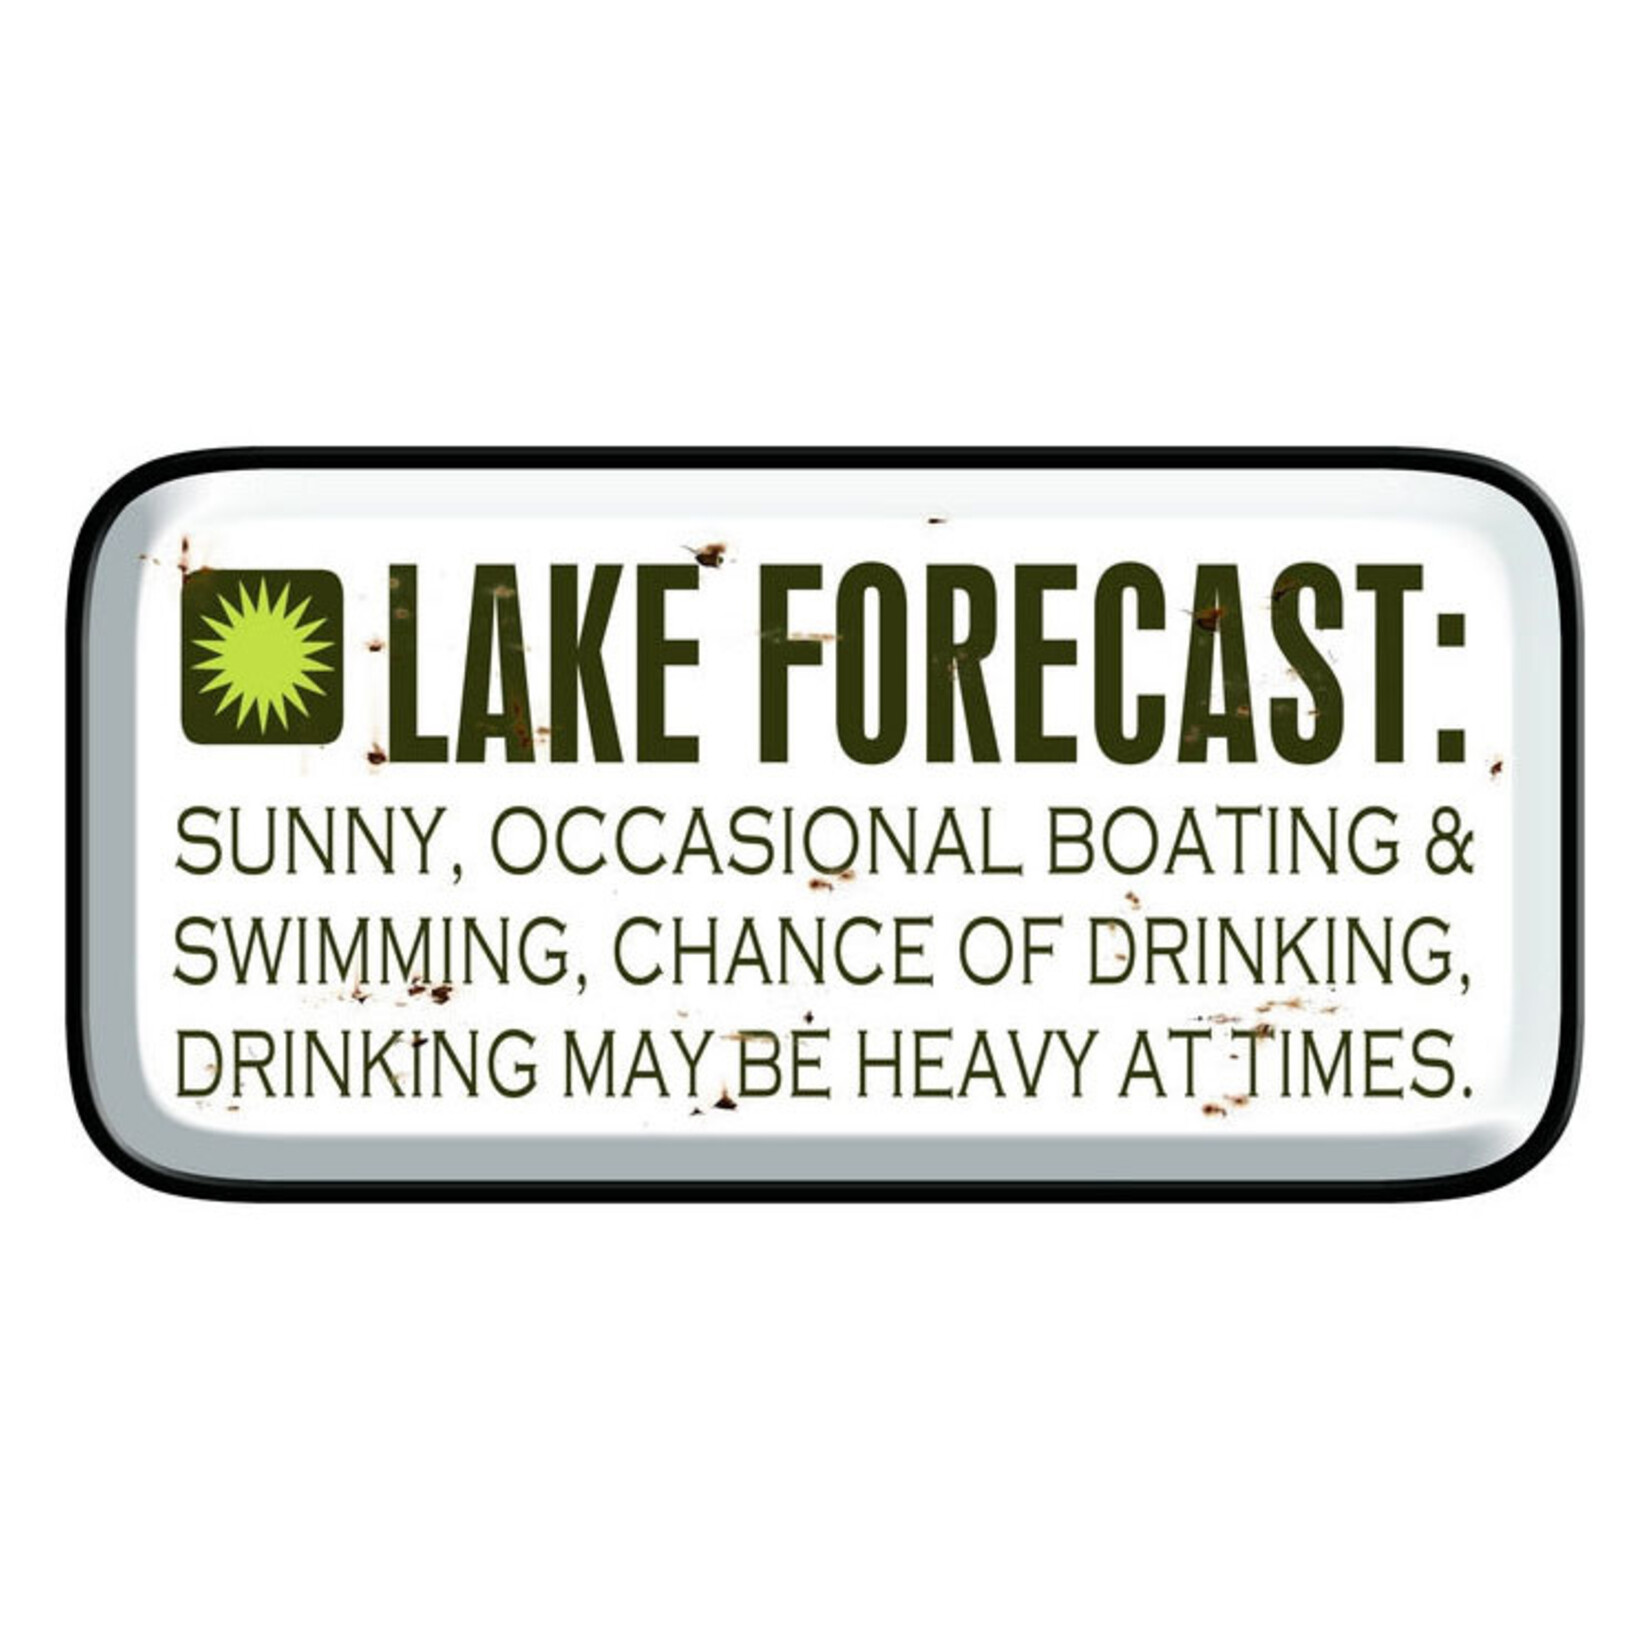 Lake Forecast Metal Sign